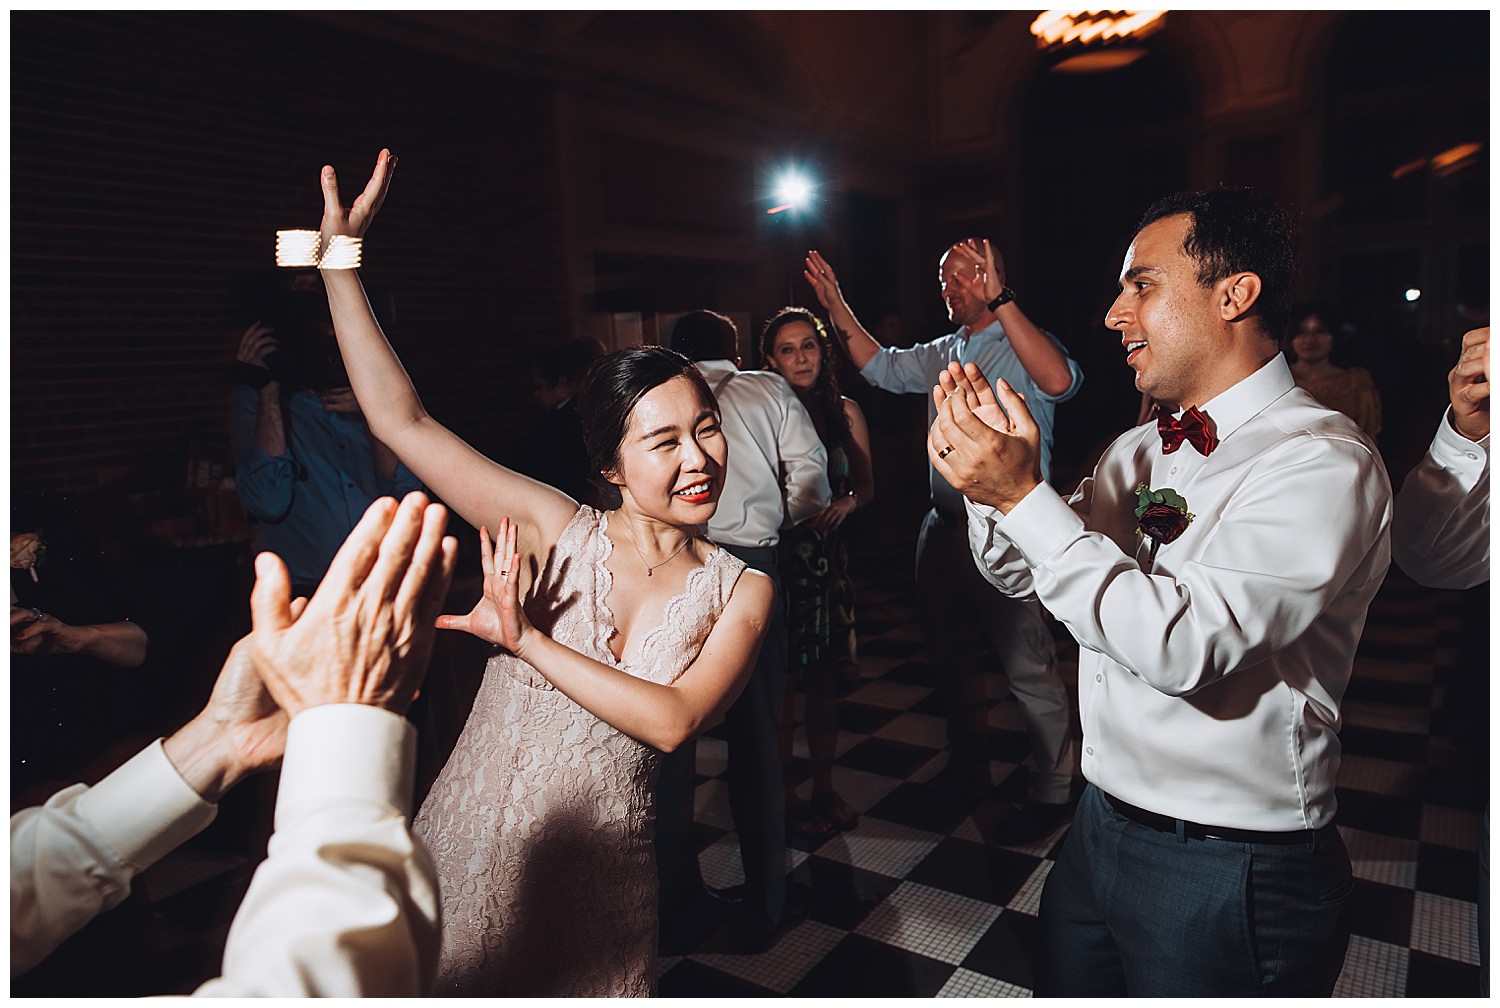 Columbus Park Refectory Wedding, dance party bride and groom last dance photo